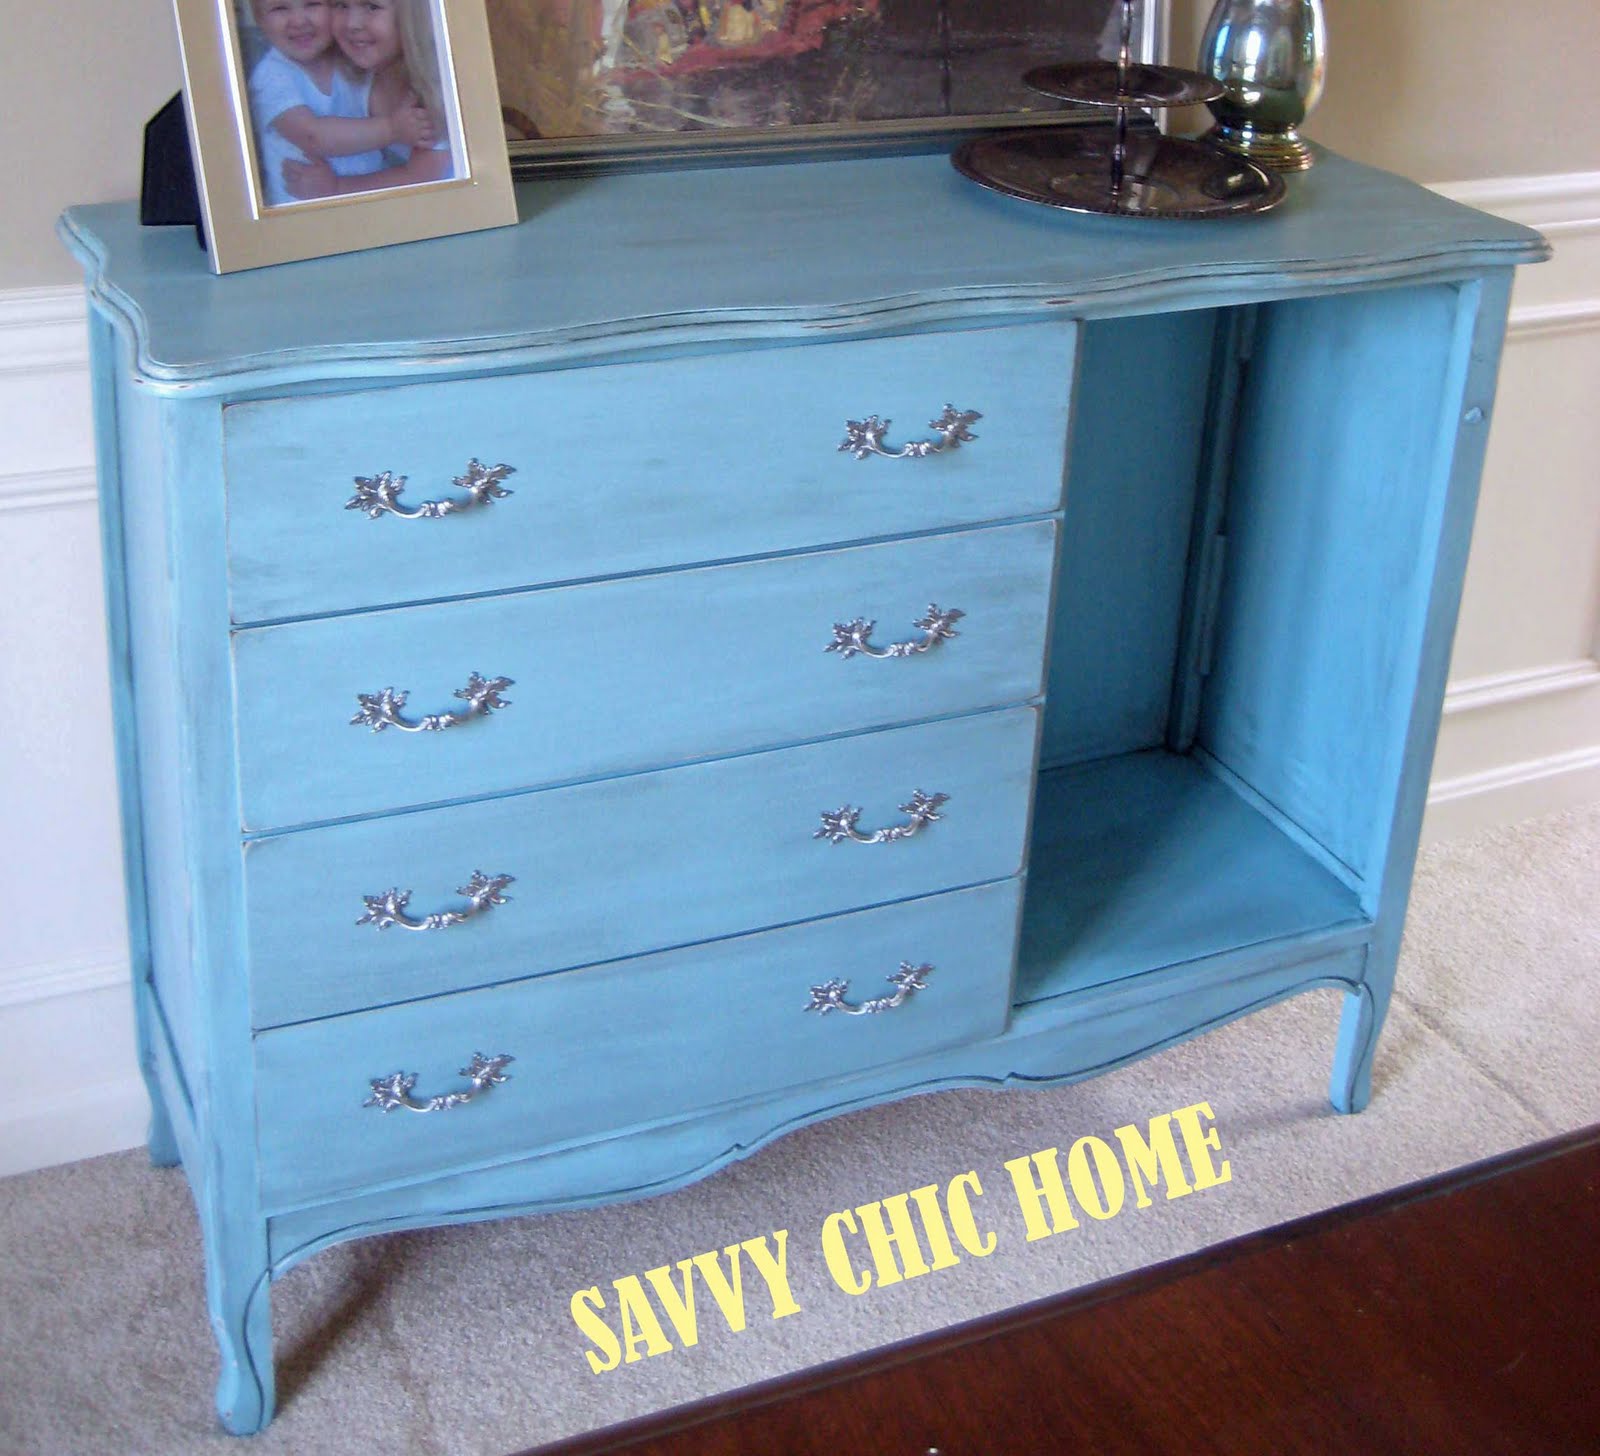 Savvy Chic Home: Turquoise Dresser Revamp